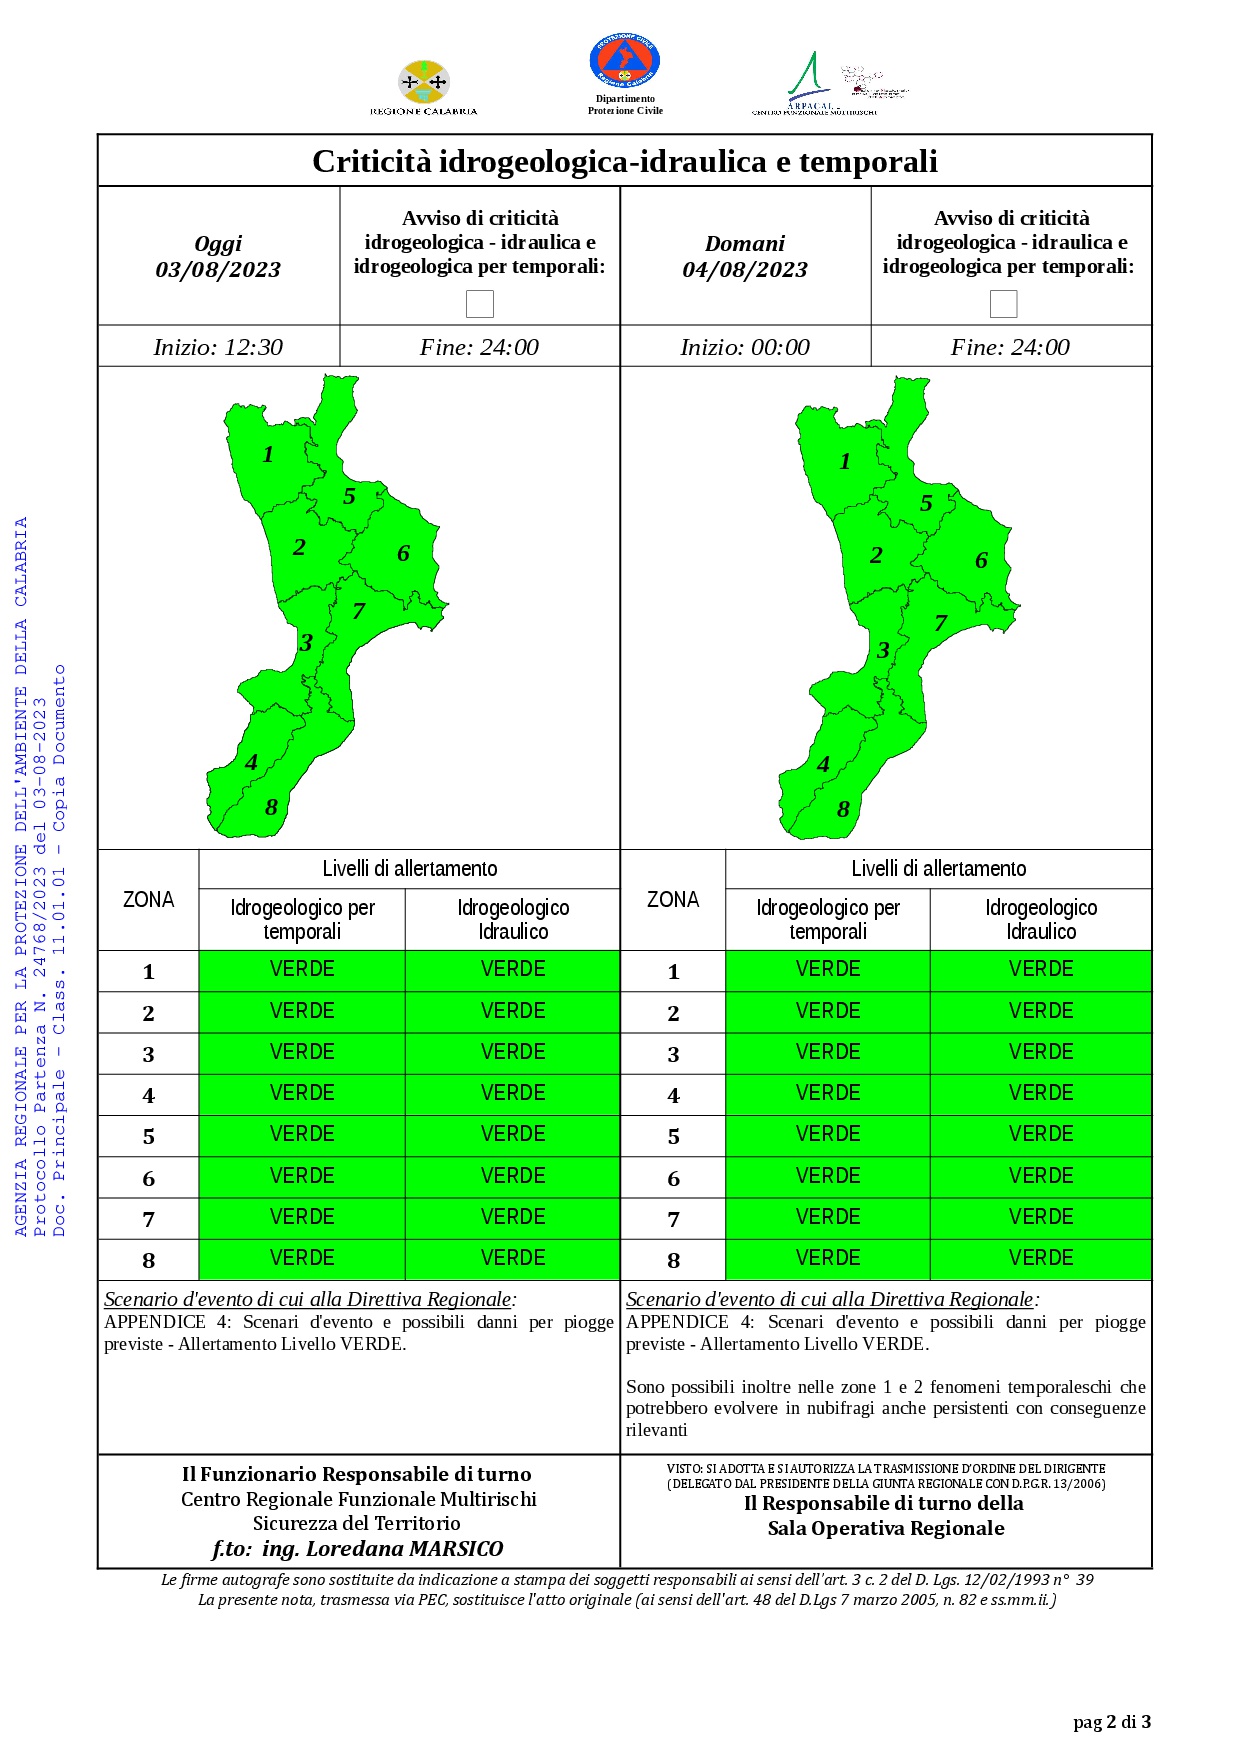 Criticità idrogeologica-idraulica e temporali in Calabria 03-08-2023